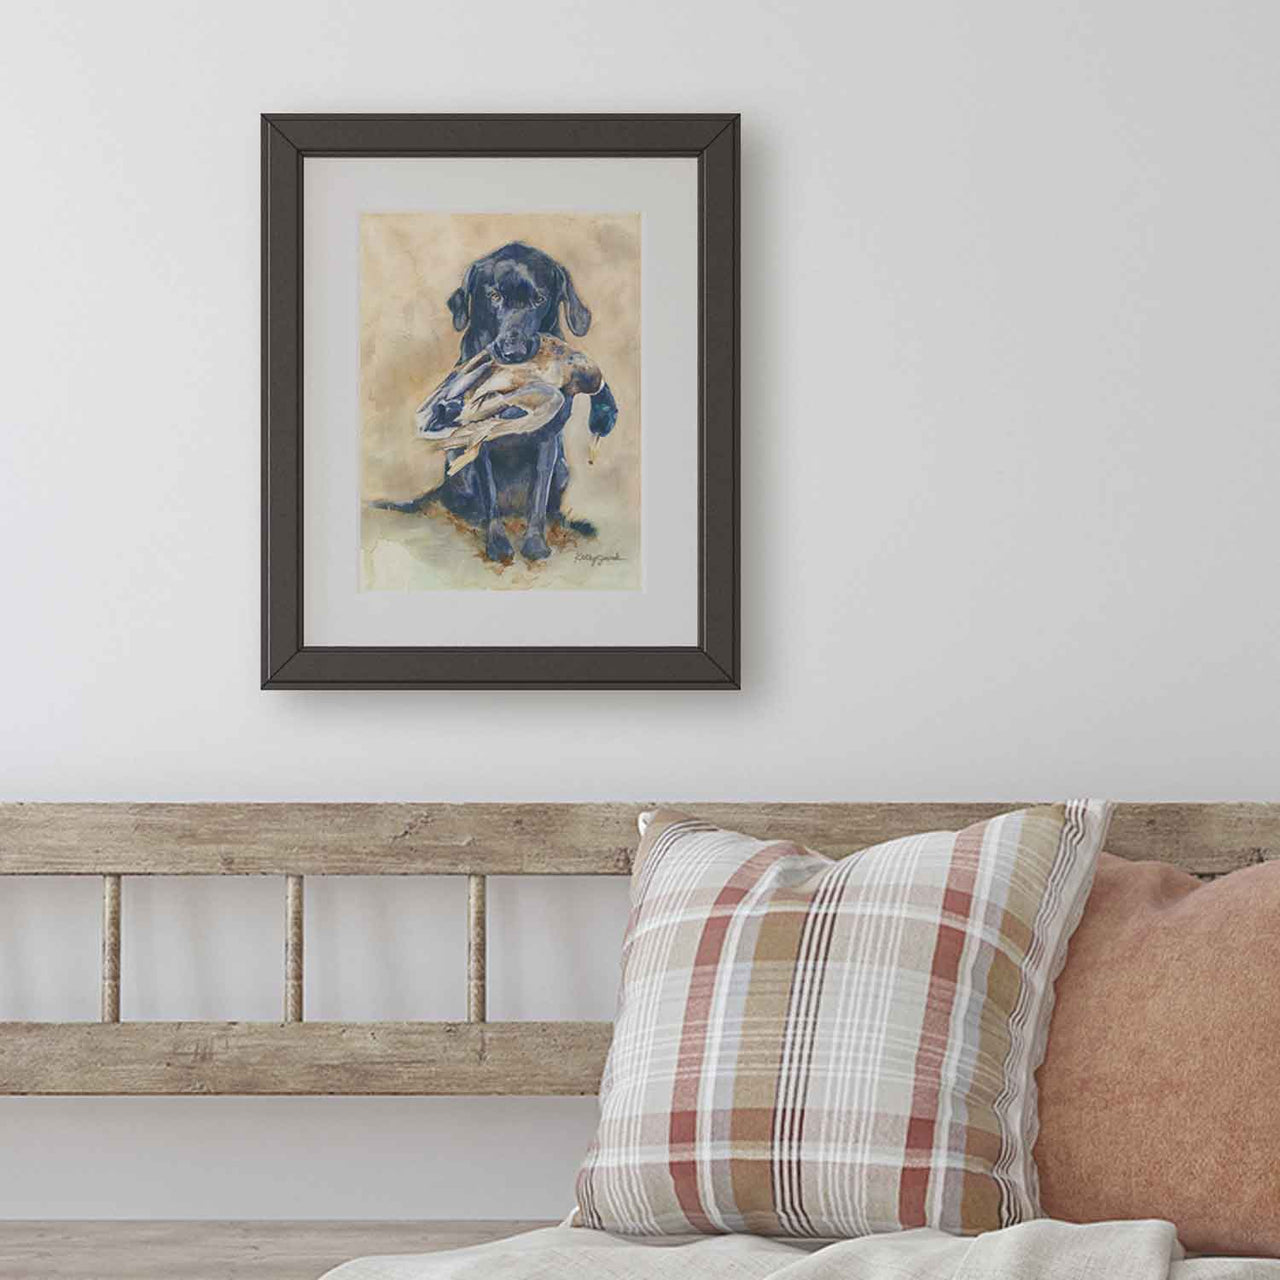 "Loyal" Black Labrador Retriever with Duck Print